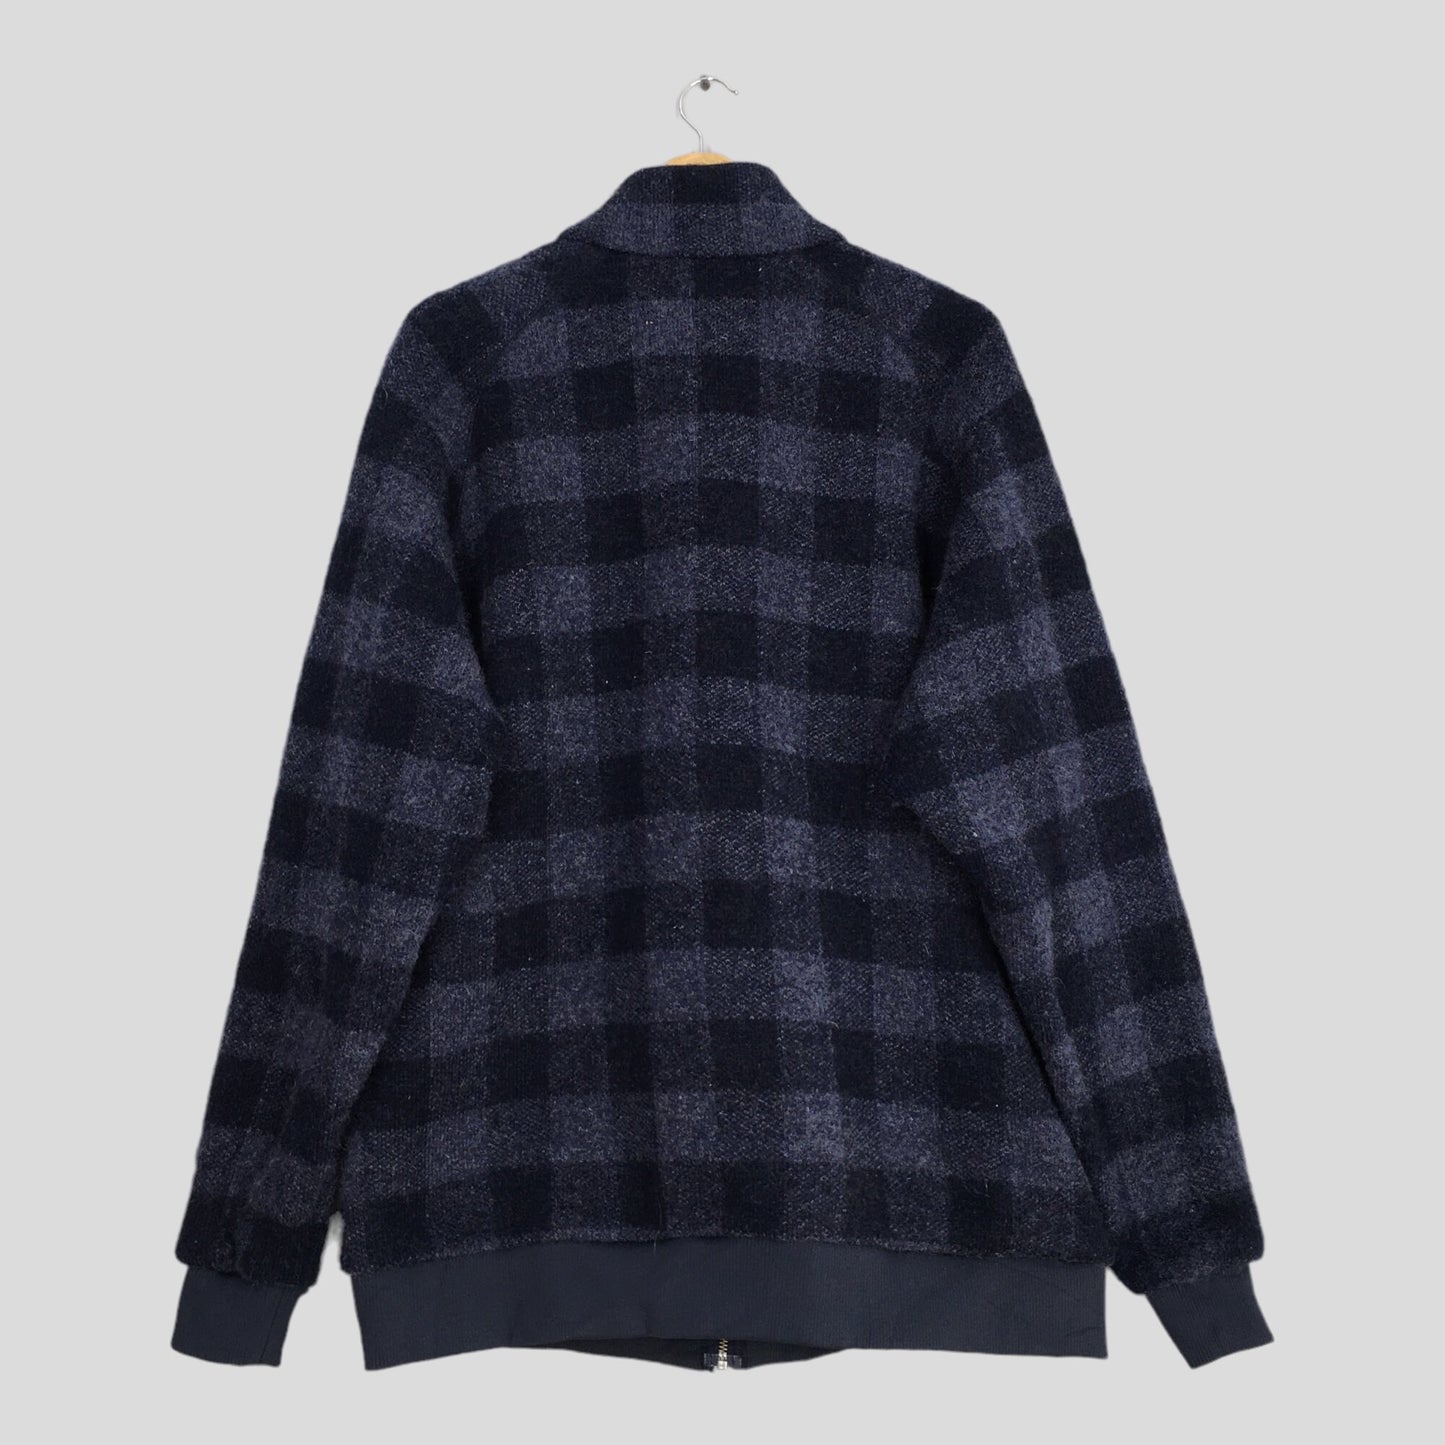 Patagonia Fleece Wool Checkered Zipper Sweater XLarge